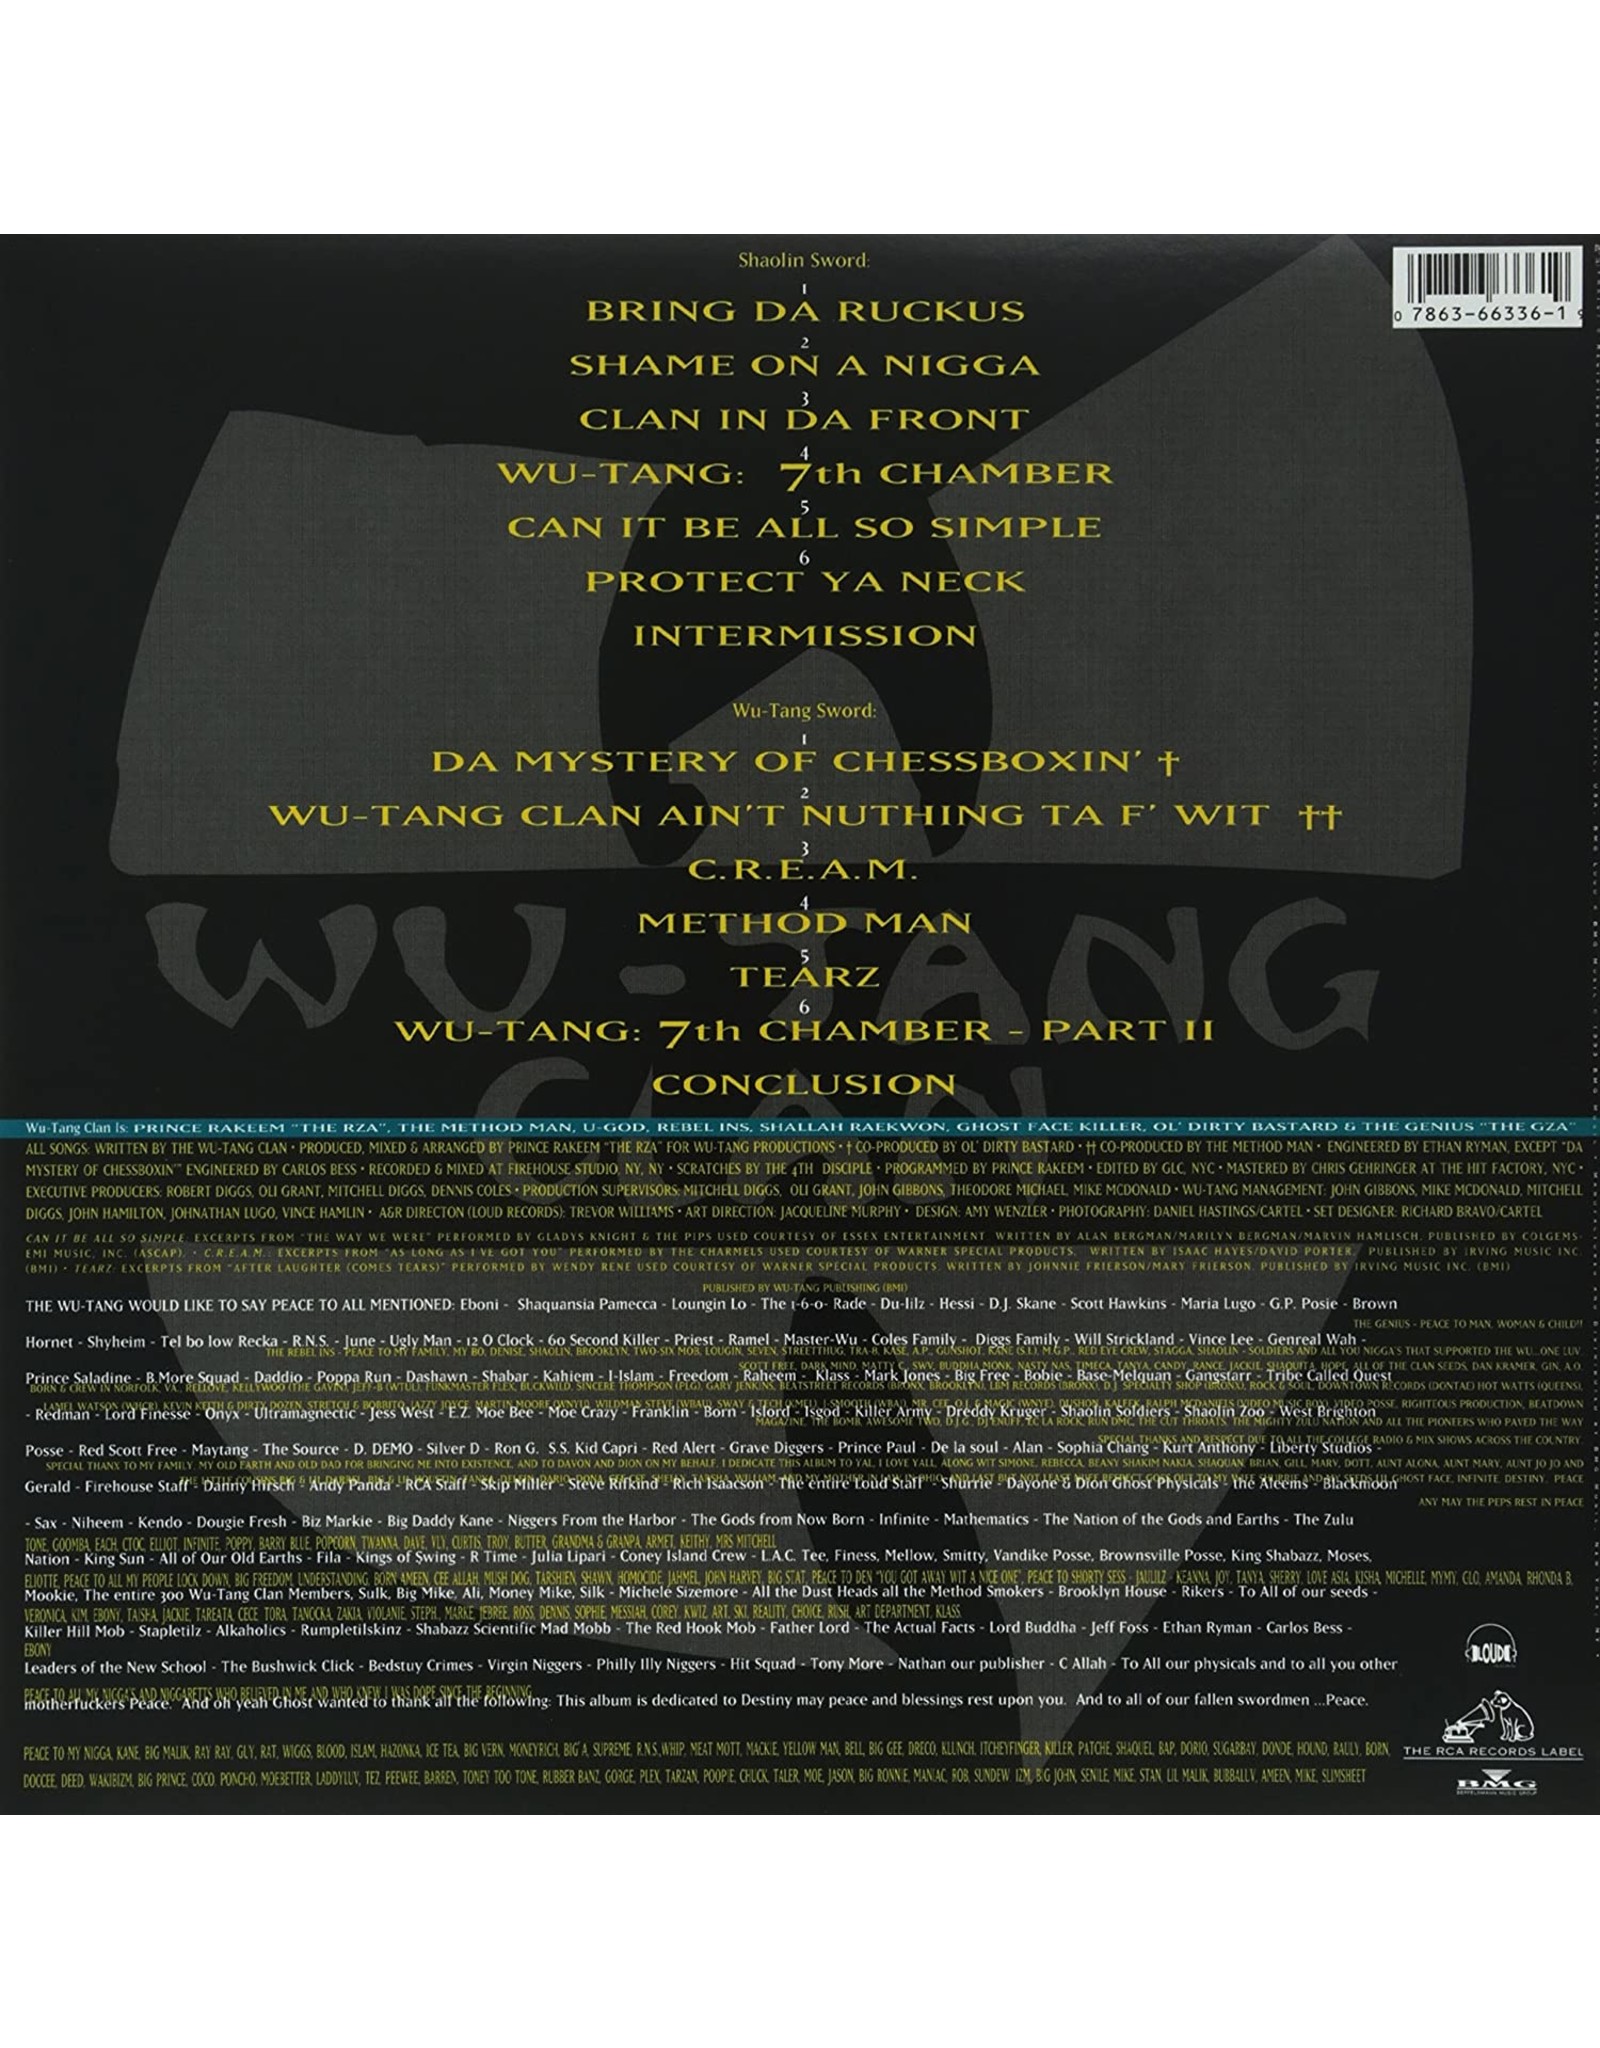 Wu-Tang Clan - Enter The Wu-Tang (Yellow Vinyl)